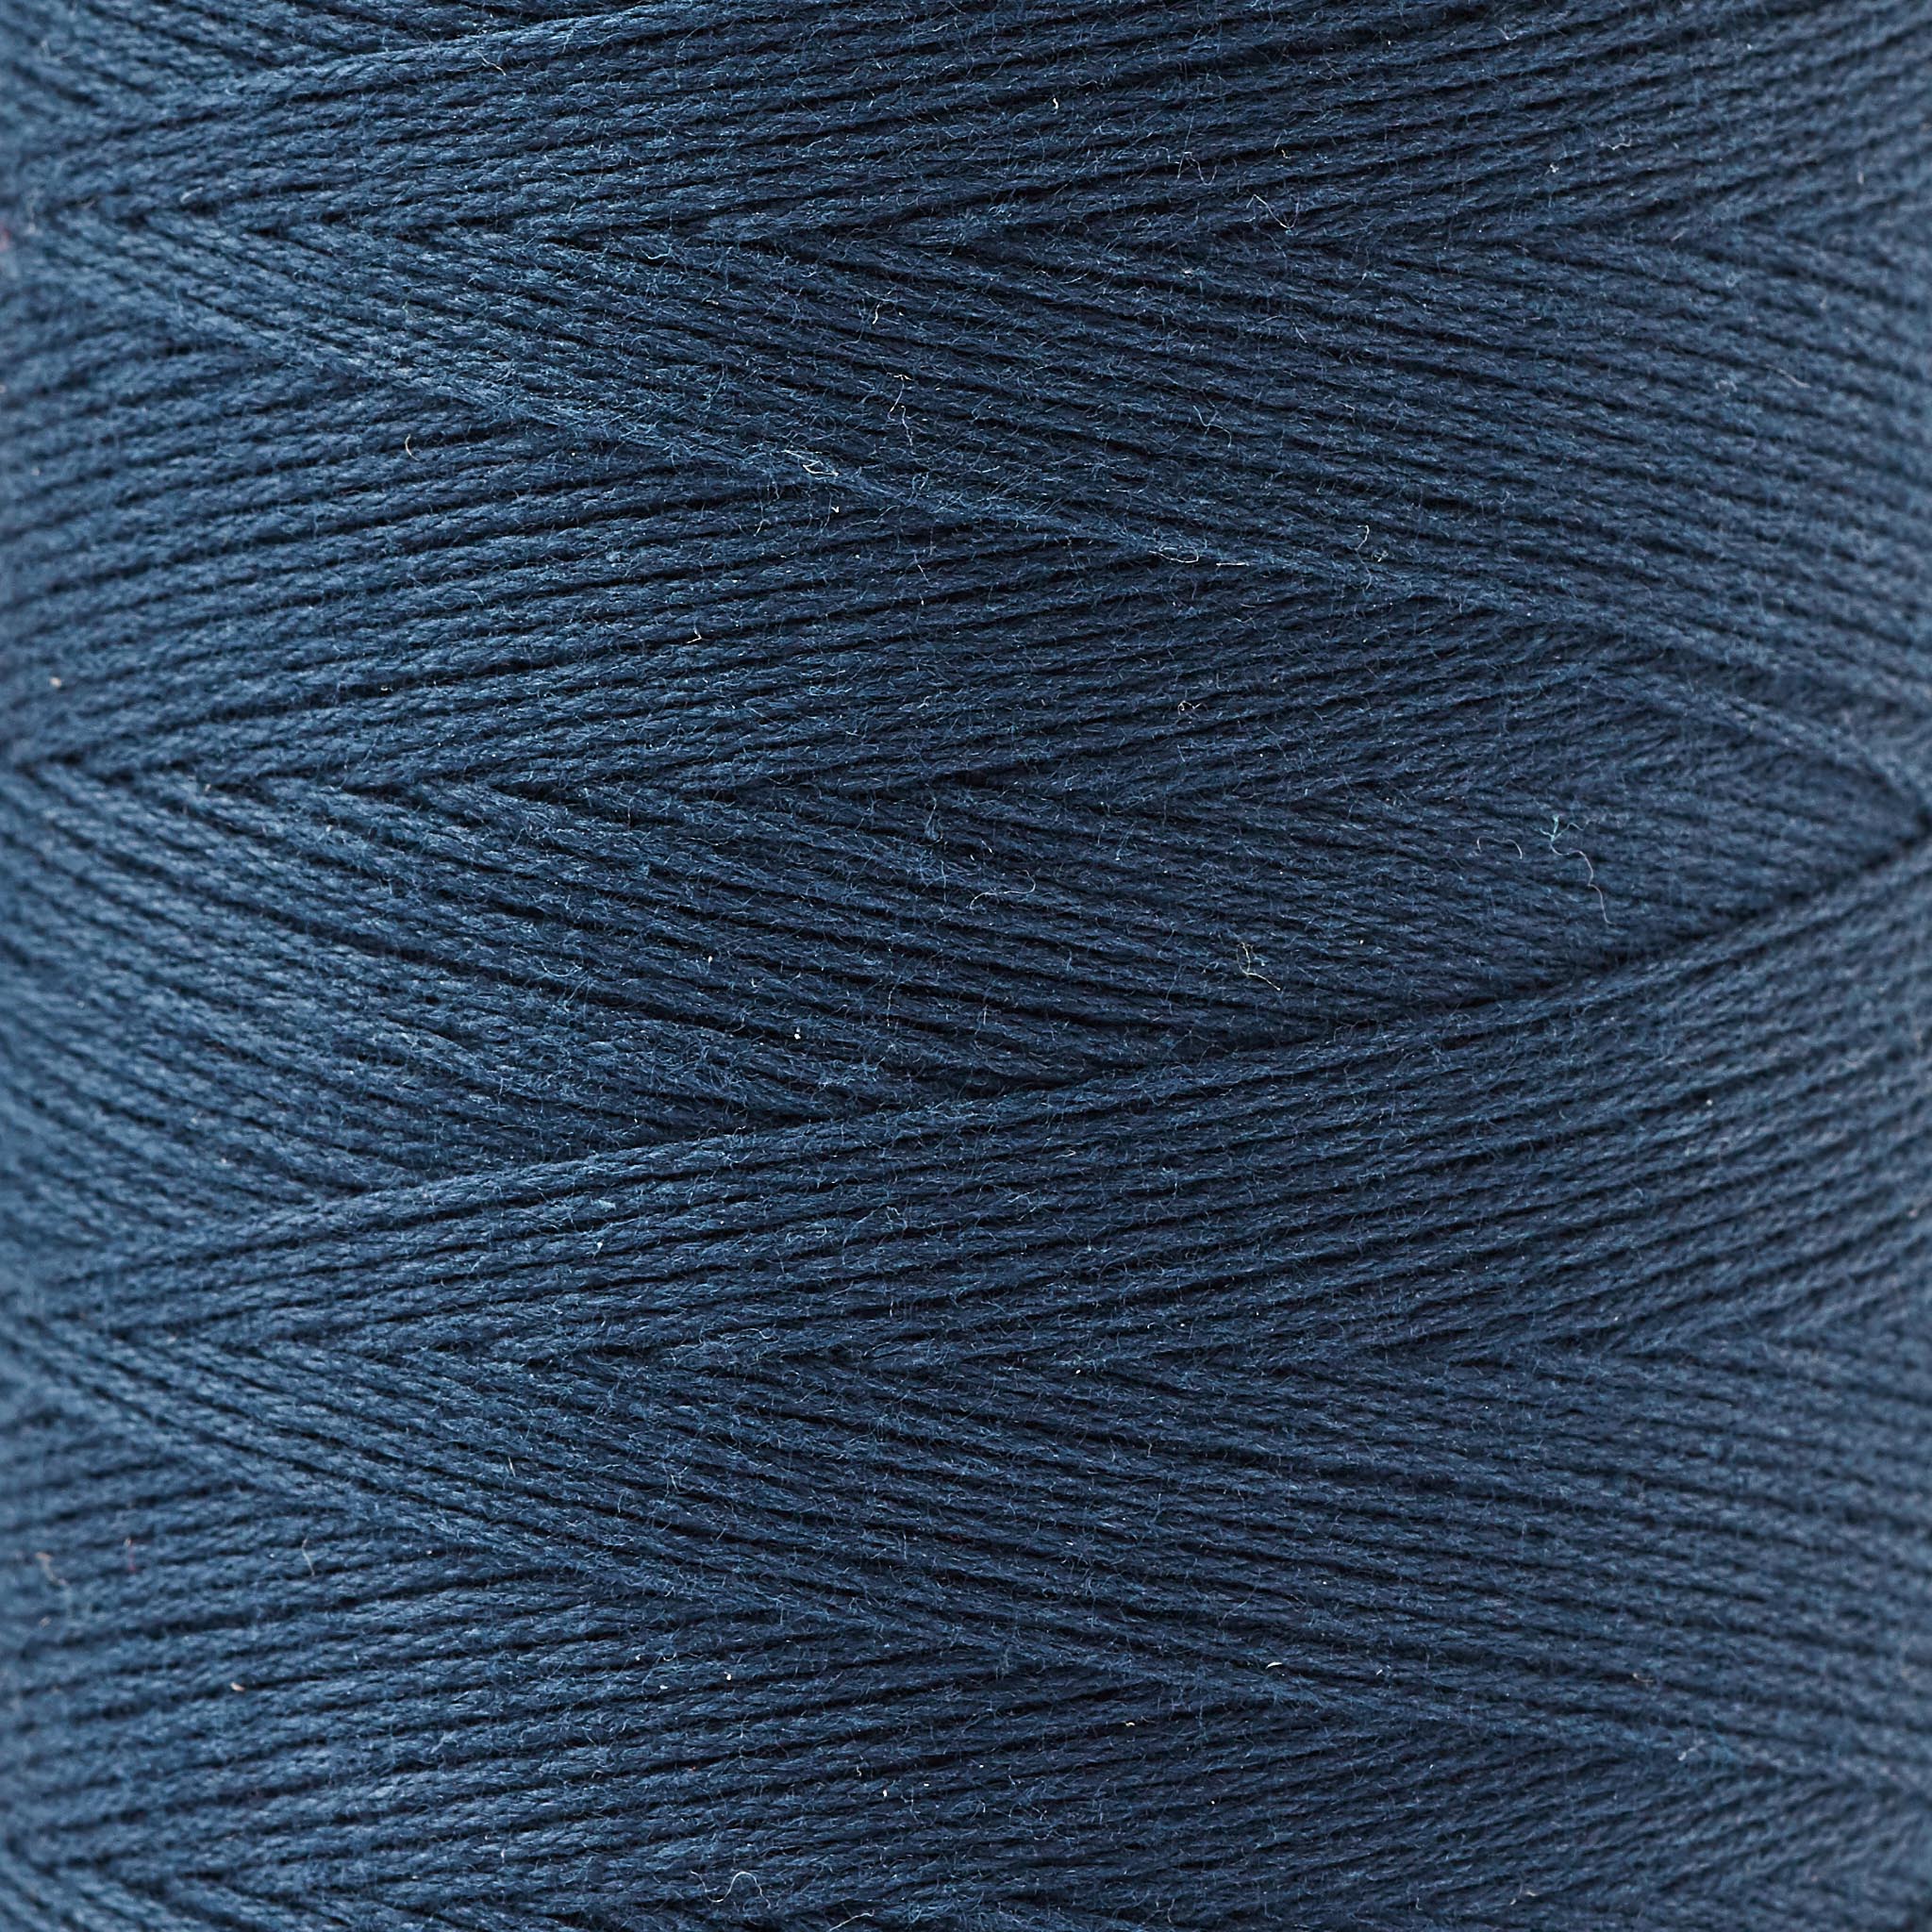 8/2 Un-Mercerized Cotton Weaving Yarn ~ Black - Gist Yarn